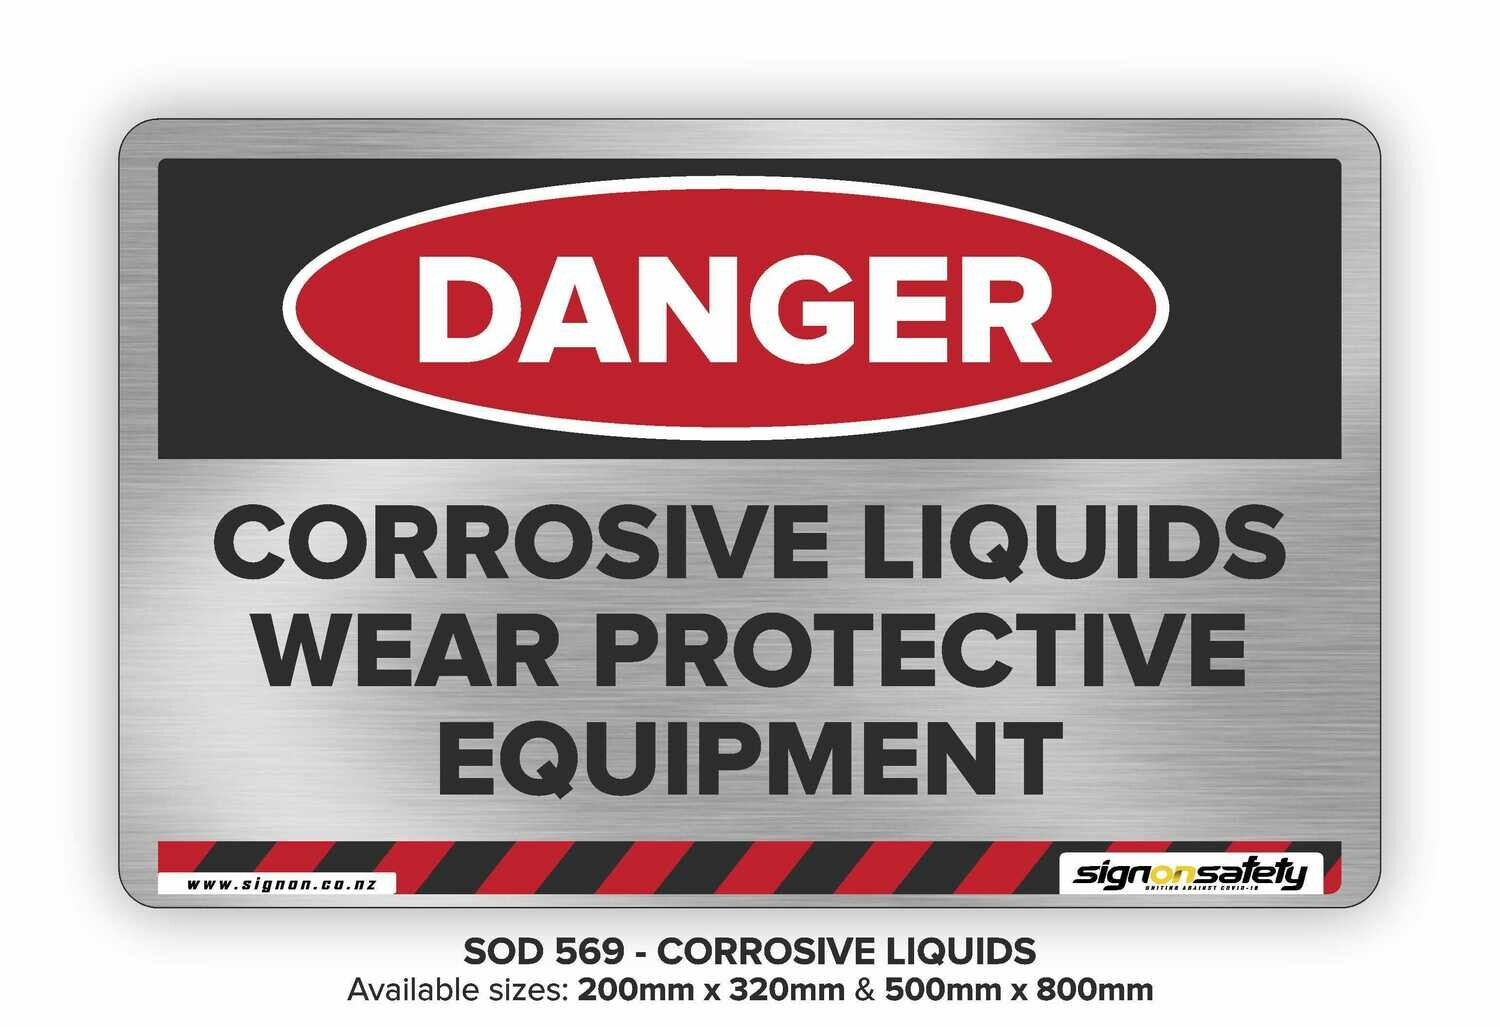 Danger - Corrosive Liquids Wear Protective Equipment